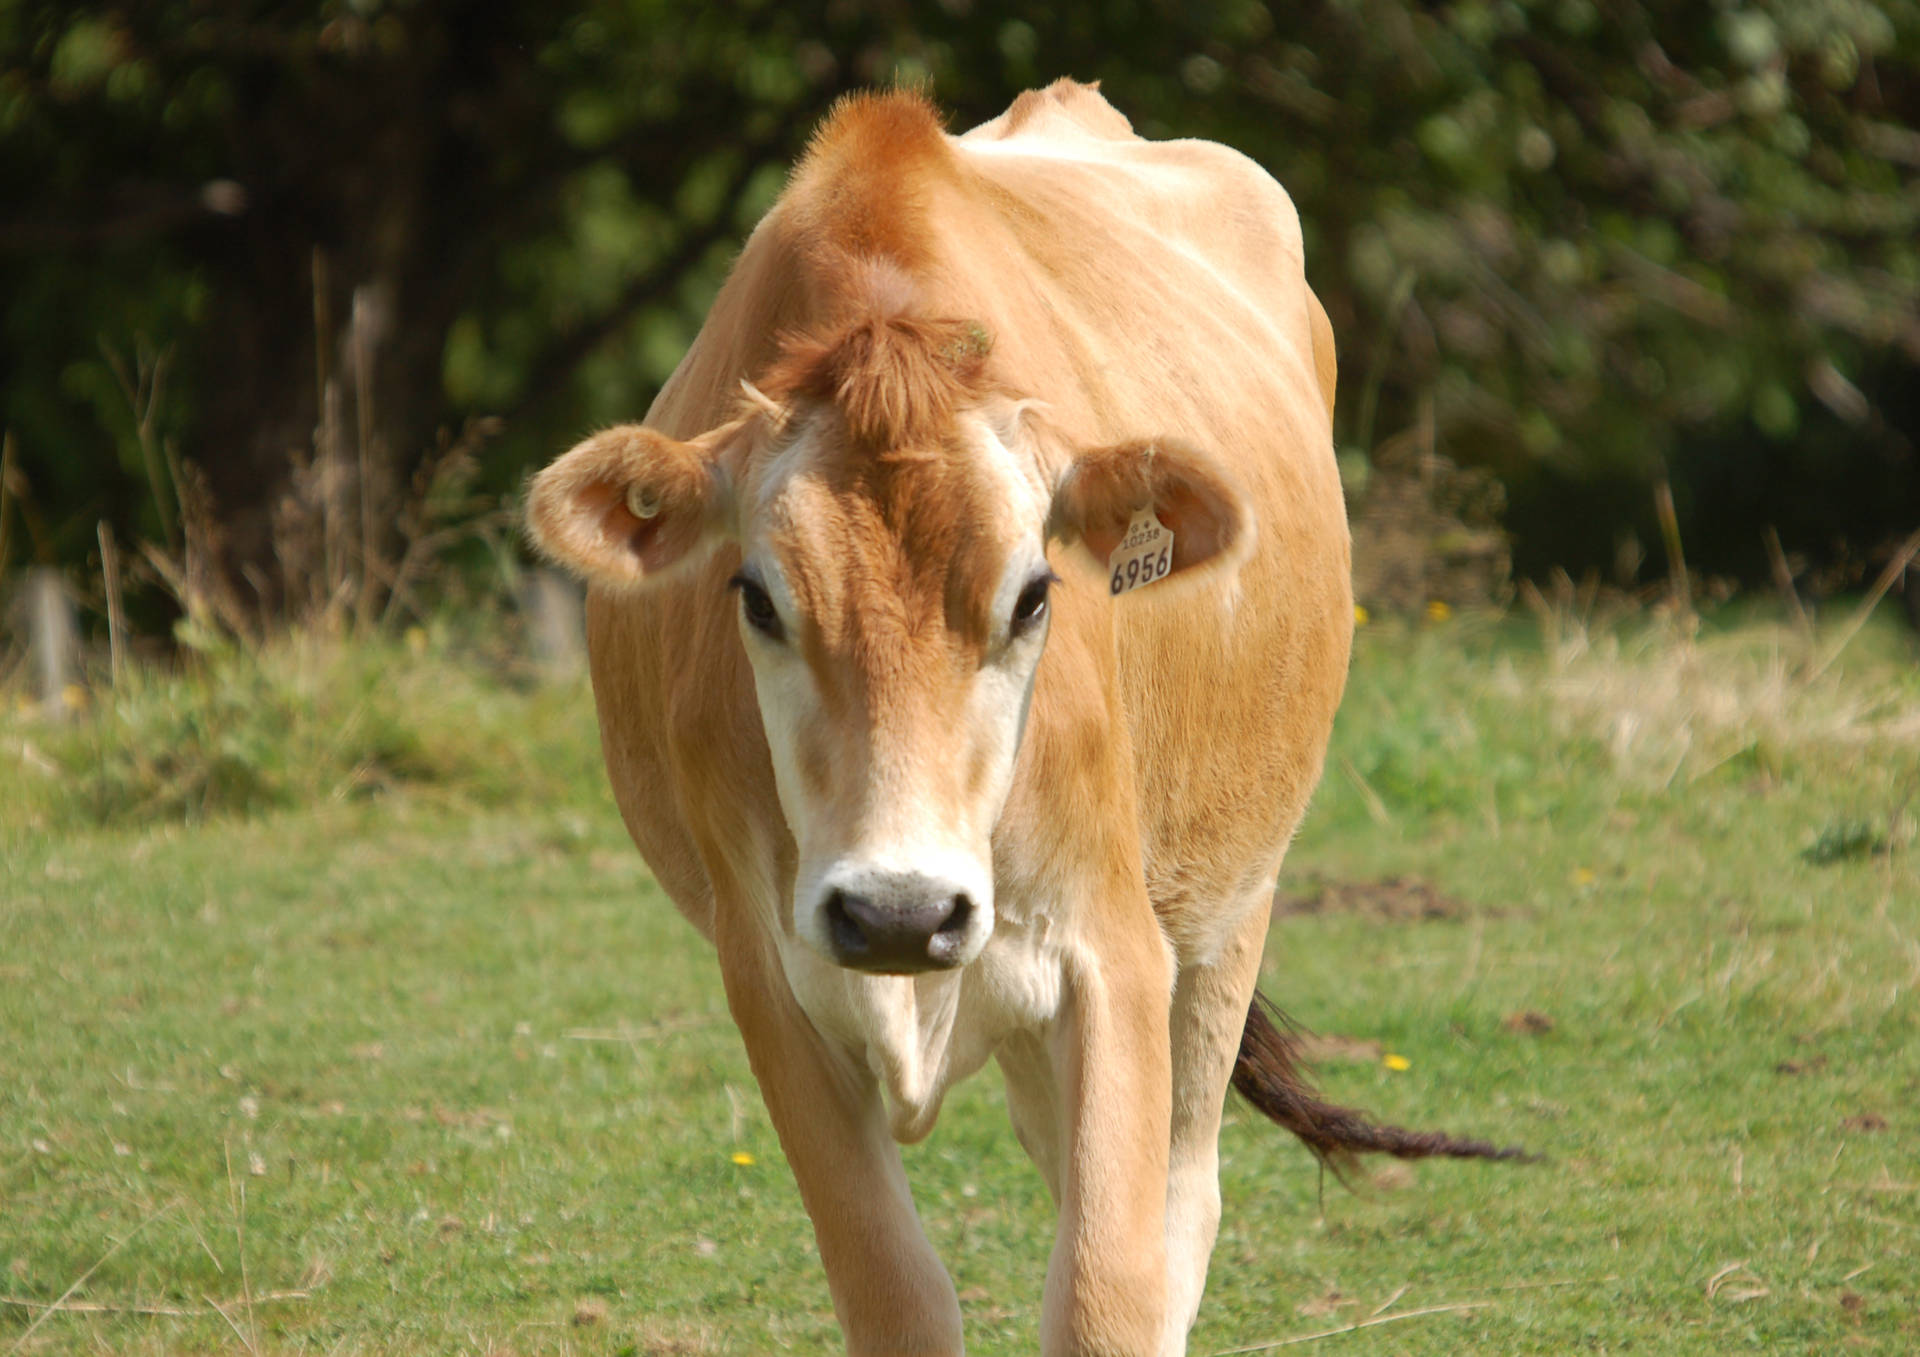 Cute Light Brown Cow On Grass